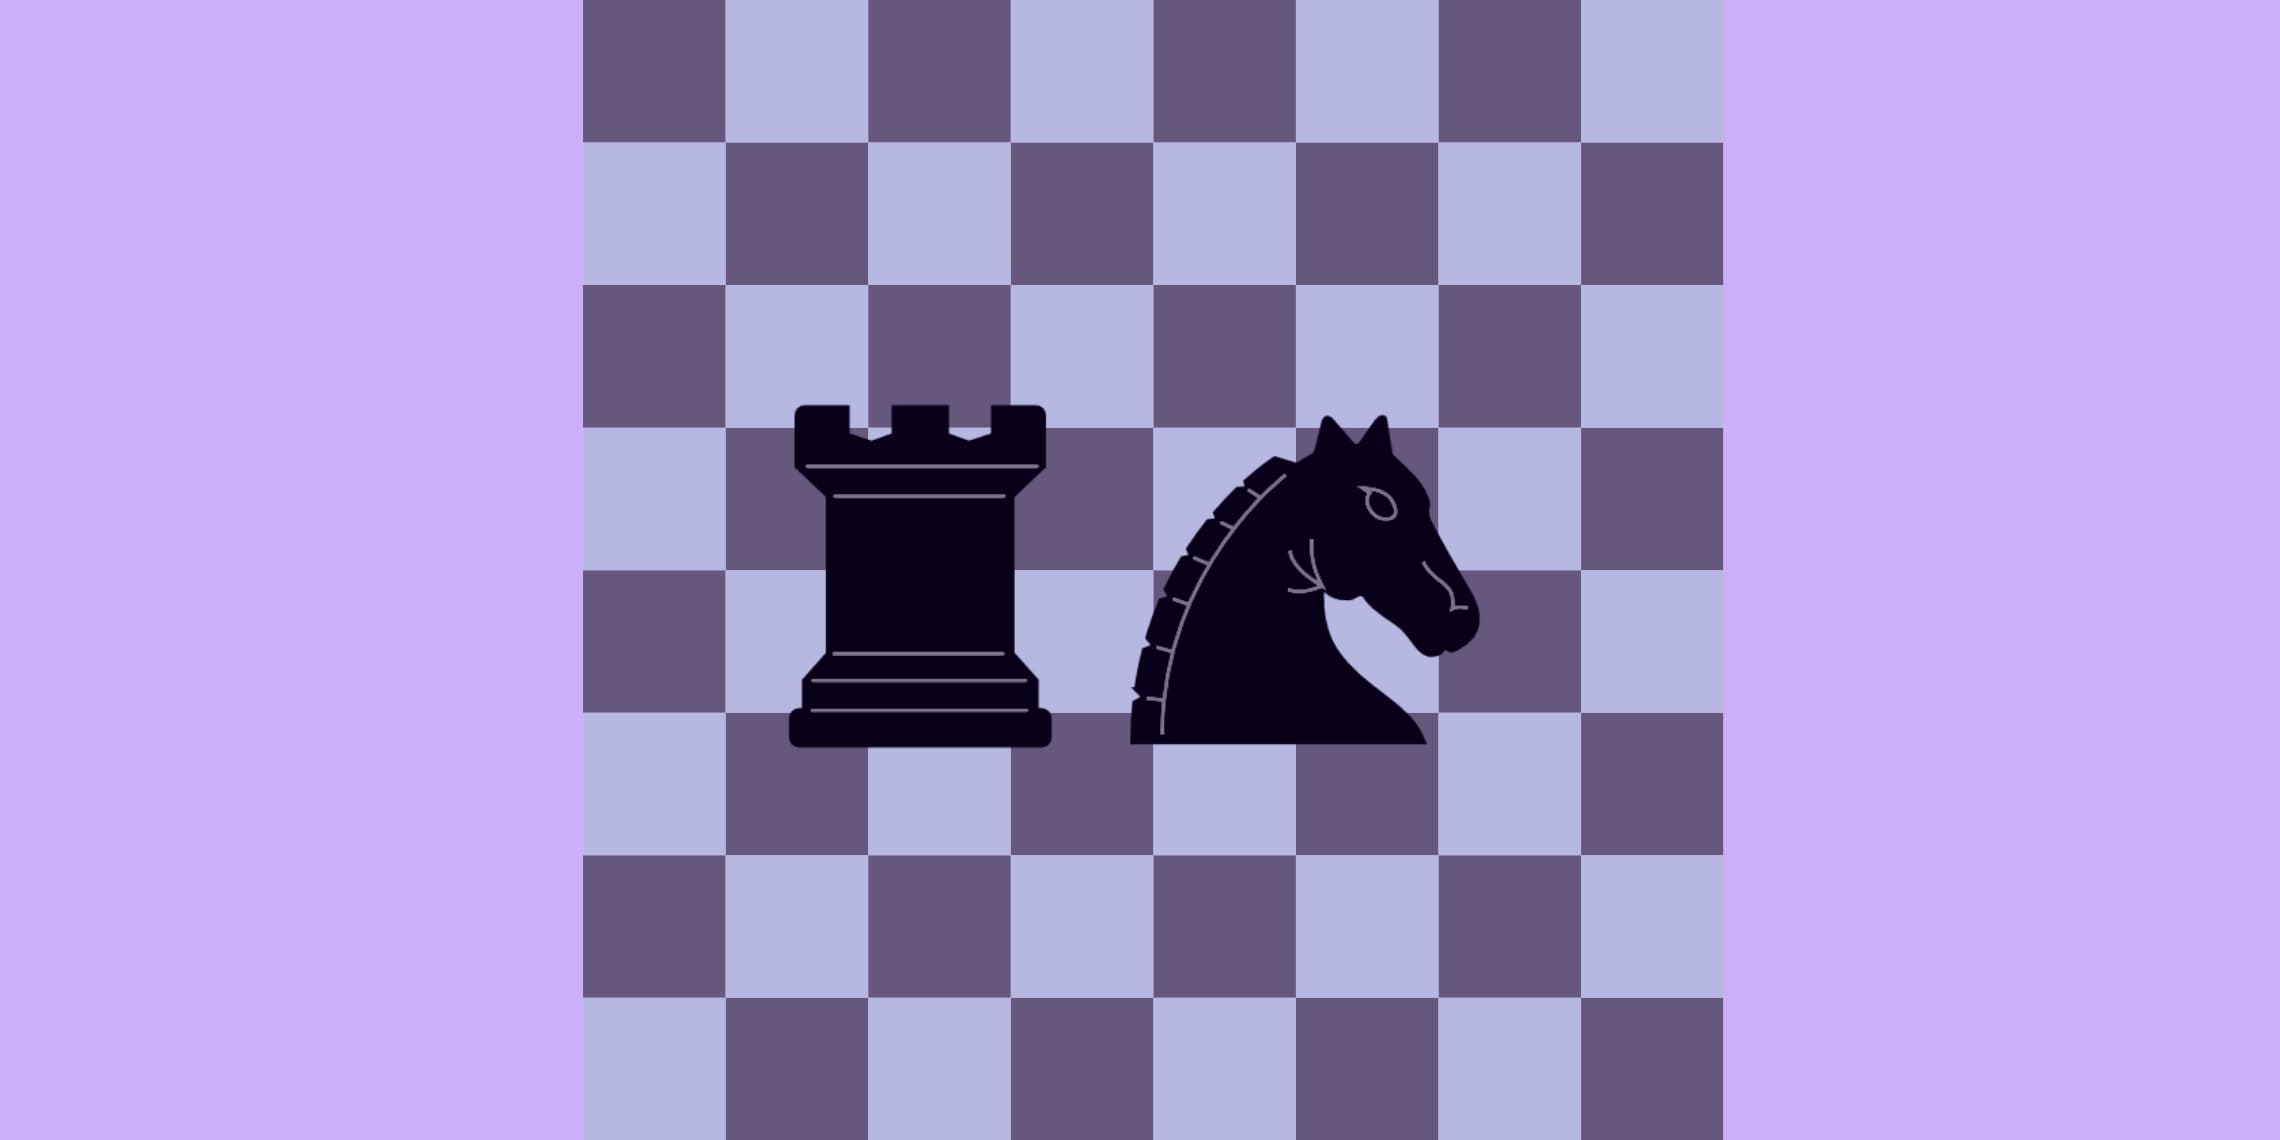 Anastasia's Mate Checkmate Pattern